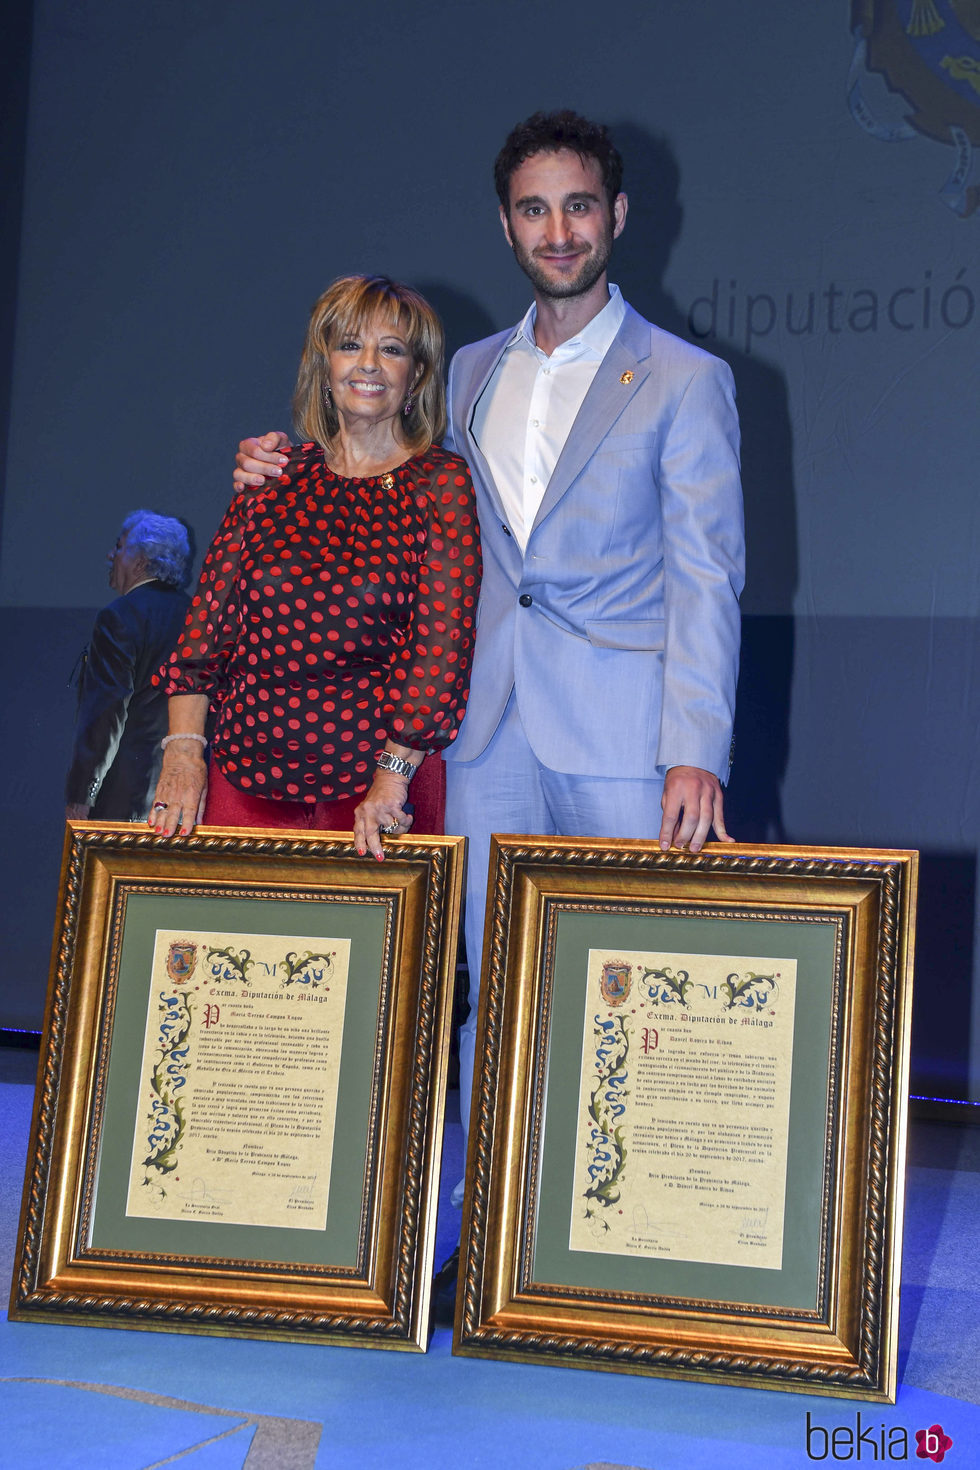 Dani Rovira y María Teresa Campos nombrados Hijos Predilectos de Málaga